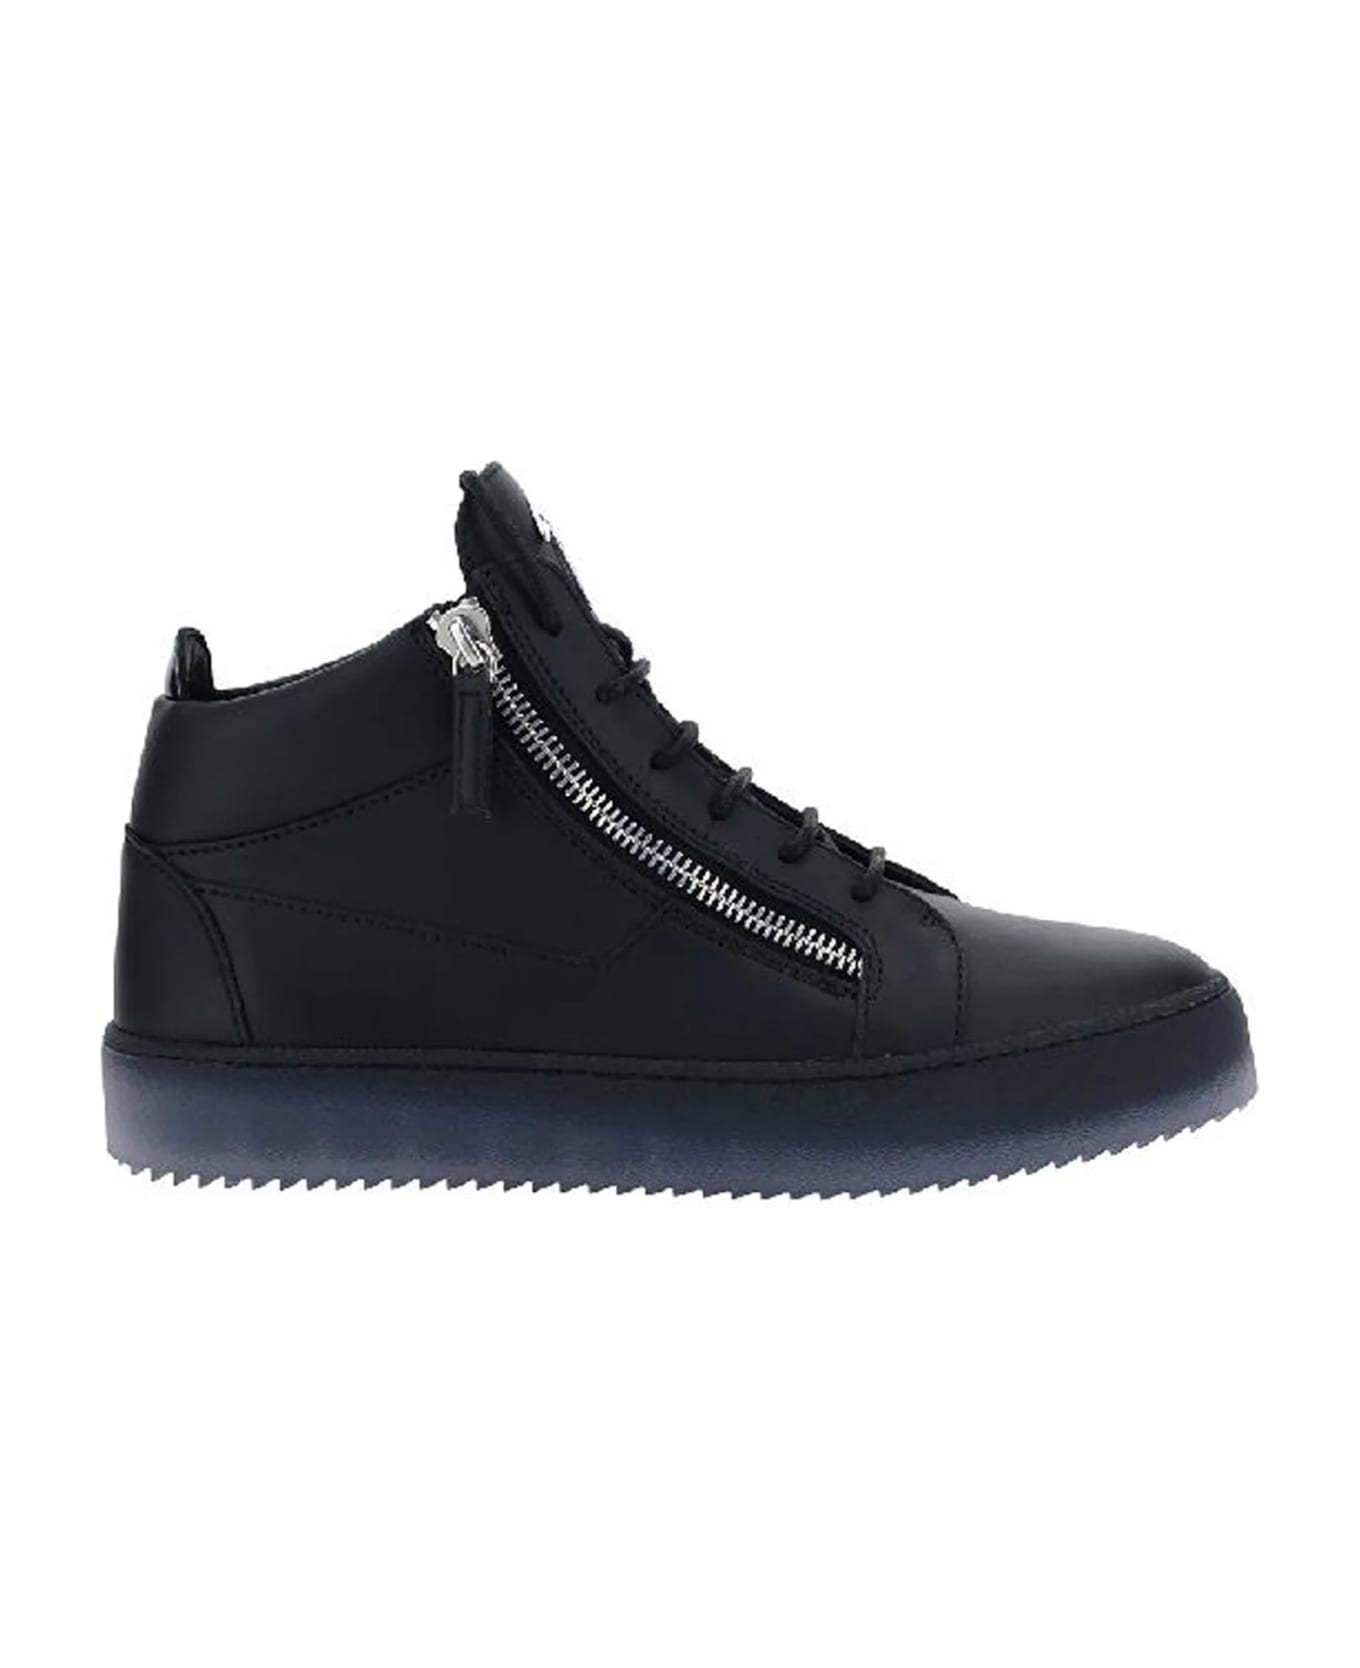 Giuseppe Zanotti May London Sneakers - Black